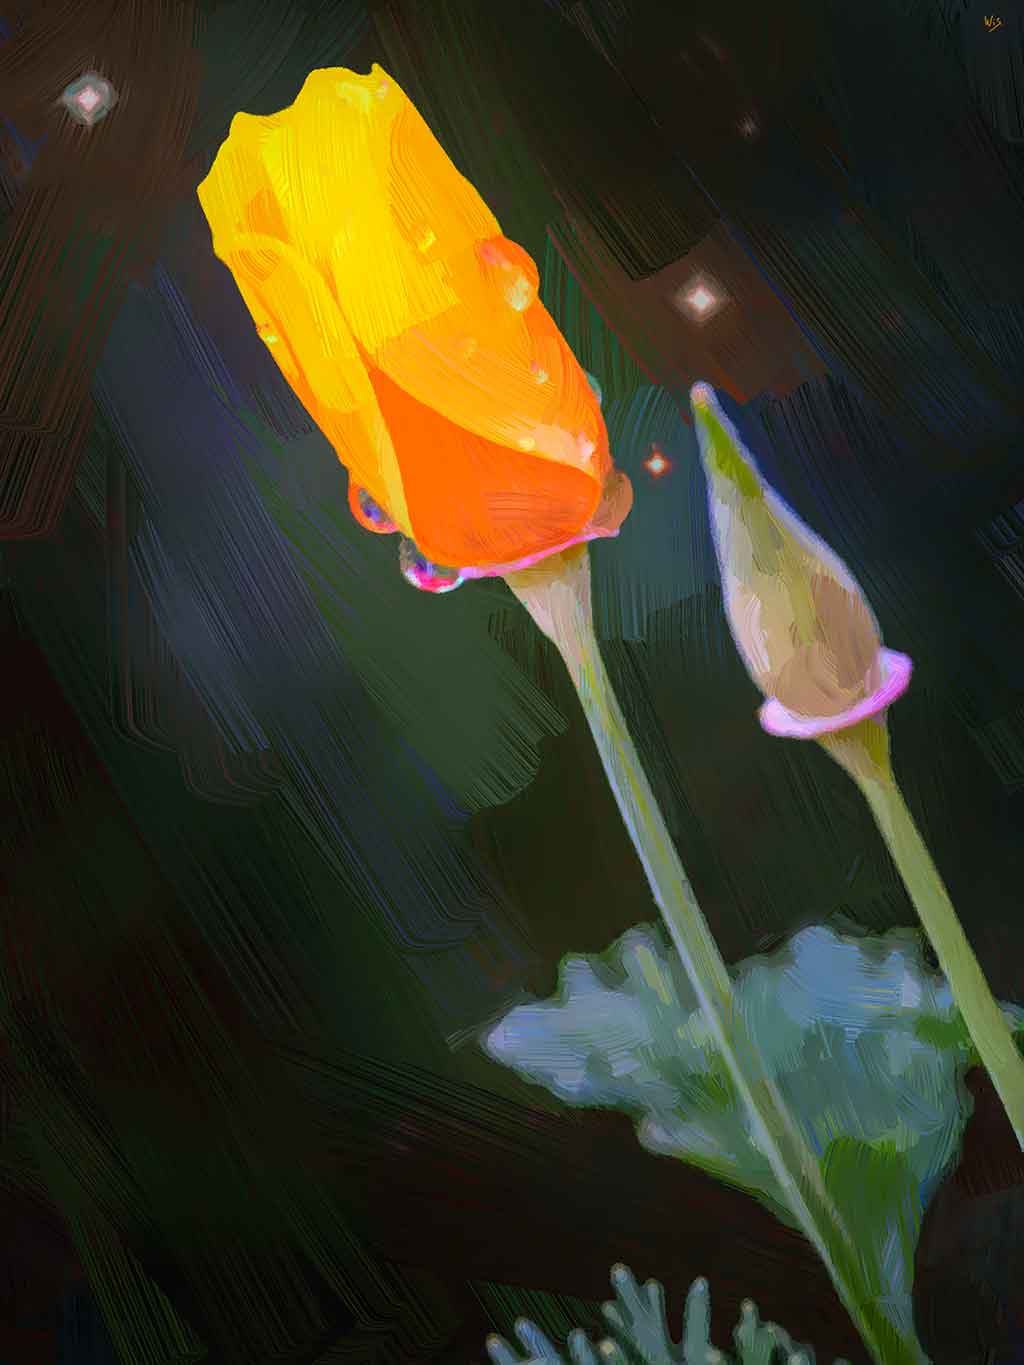 Young orange poppy, dew drops on flower, violent spaces stars in background; by Wiesław Sadurski